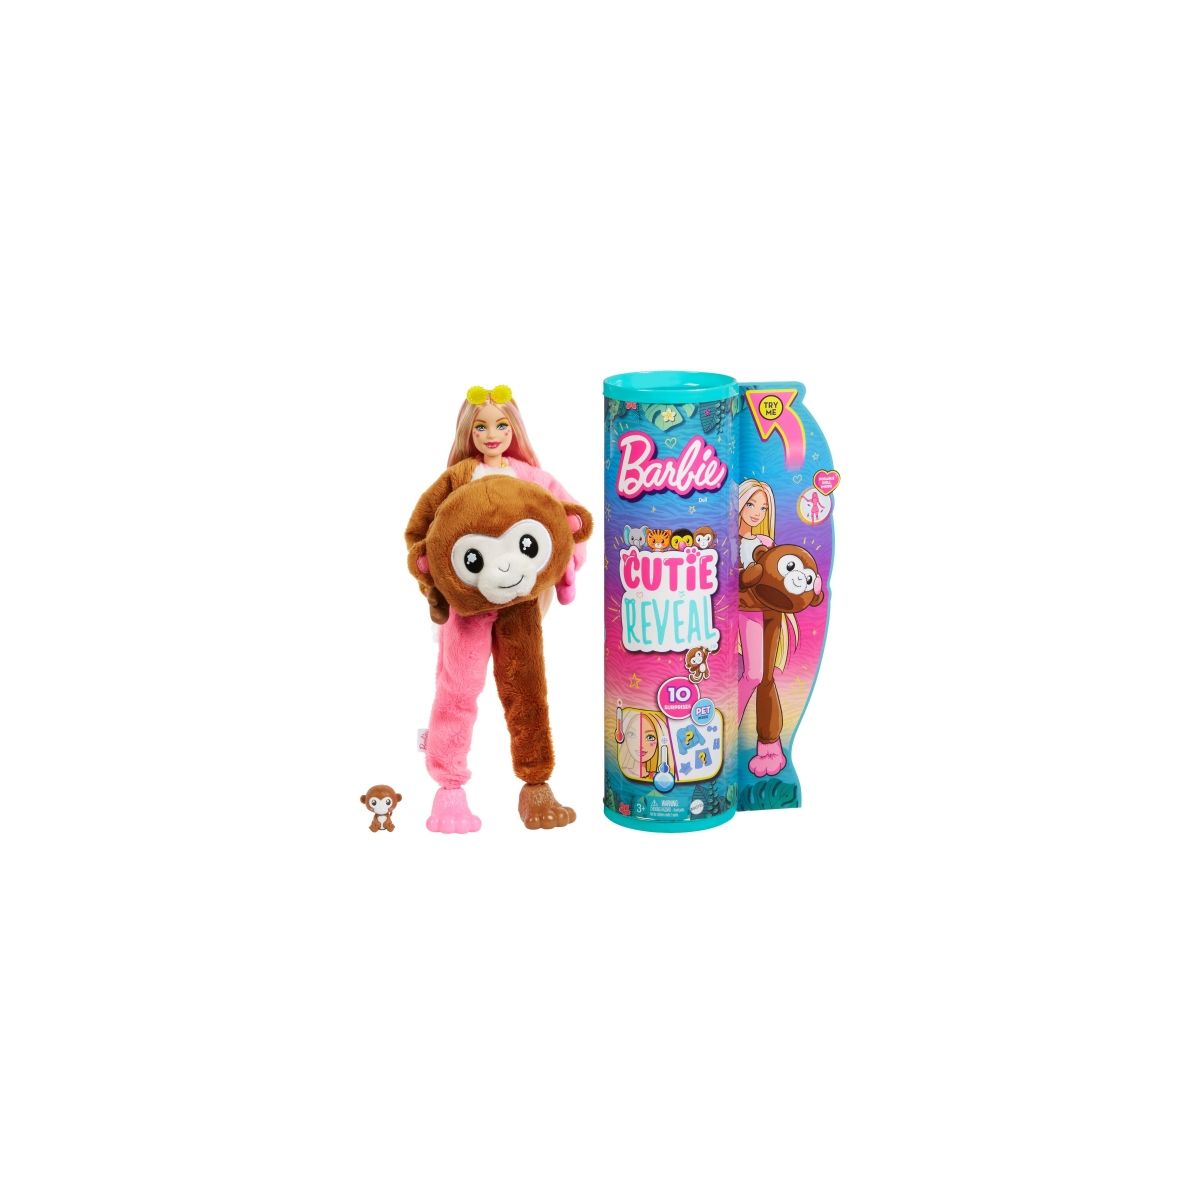 Lalka Cutie Reveal małpka [mm:] 290 Barbie (HKR01)